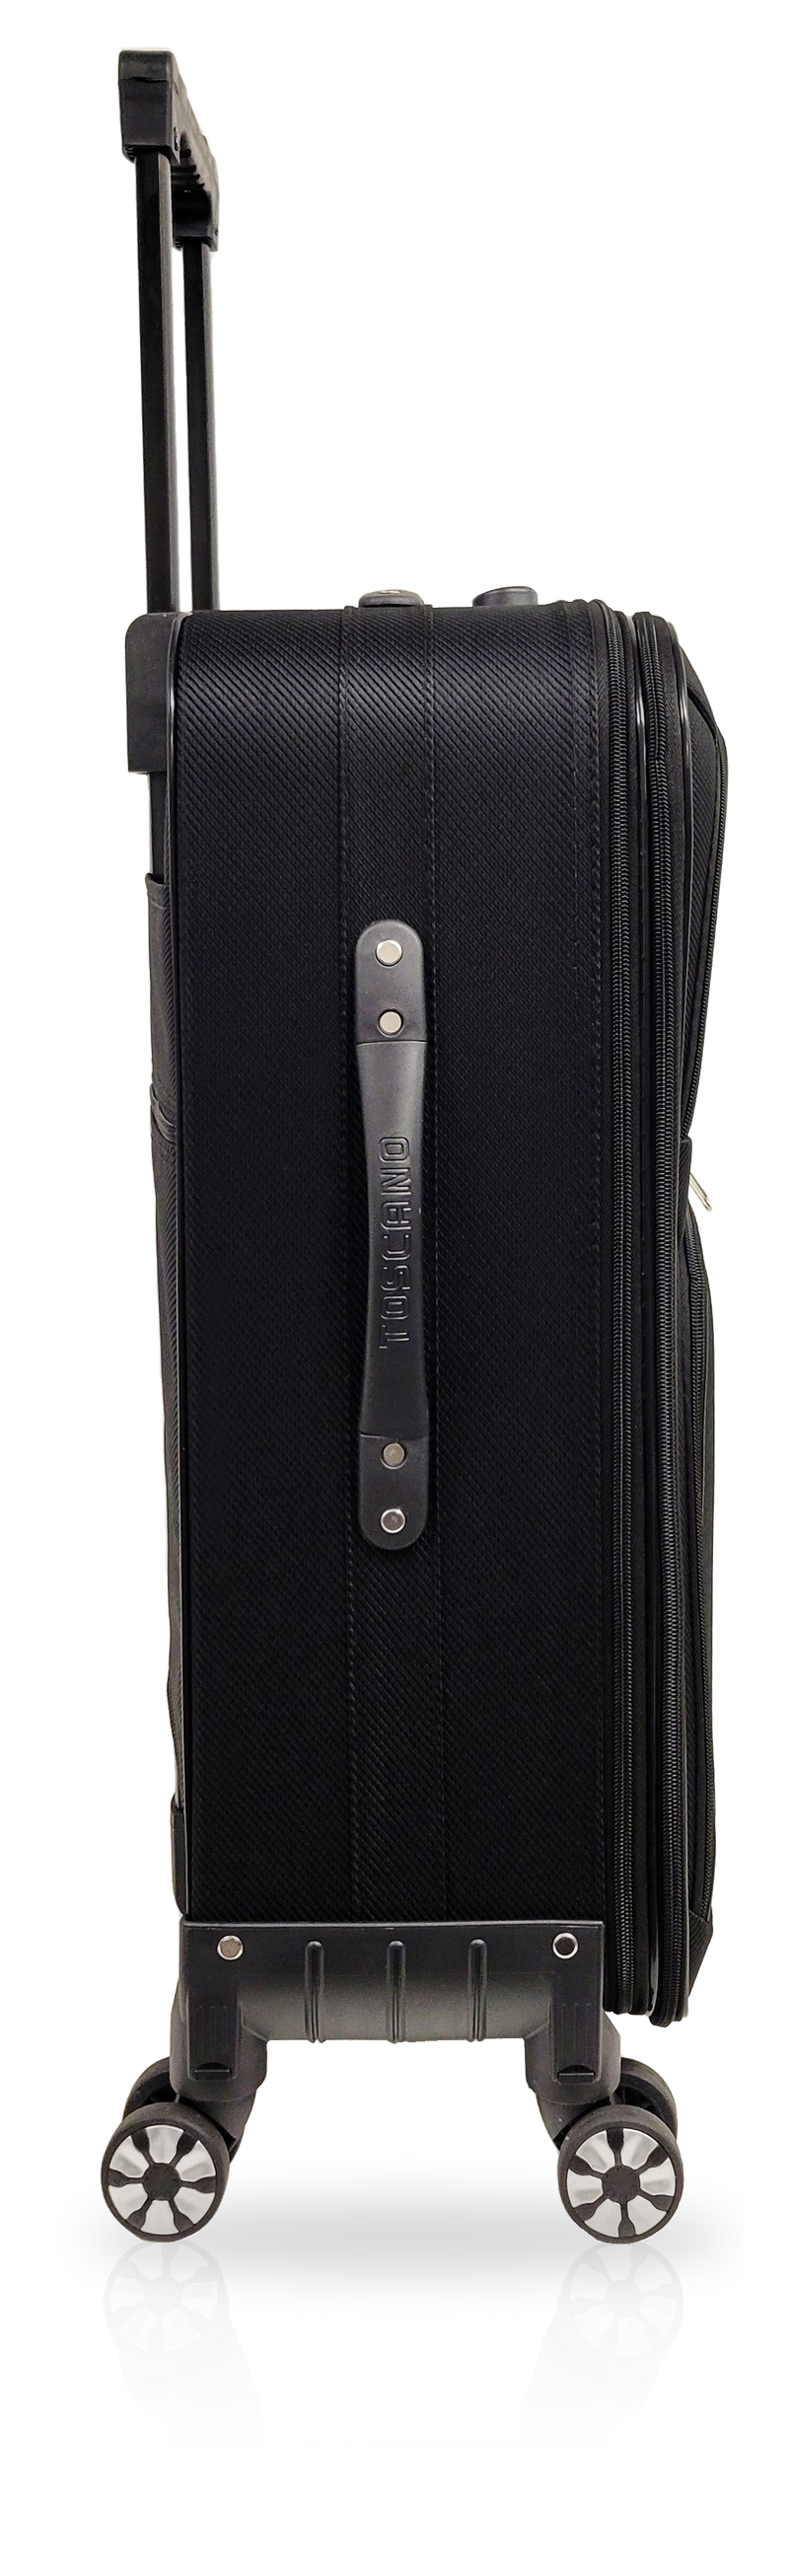 TOSCANO Aiutante 3PC (23", 27", 31") Lightweight Luggage Suitcase